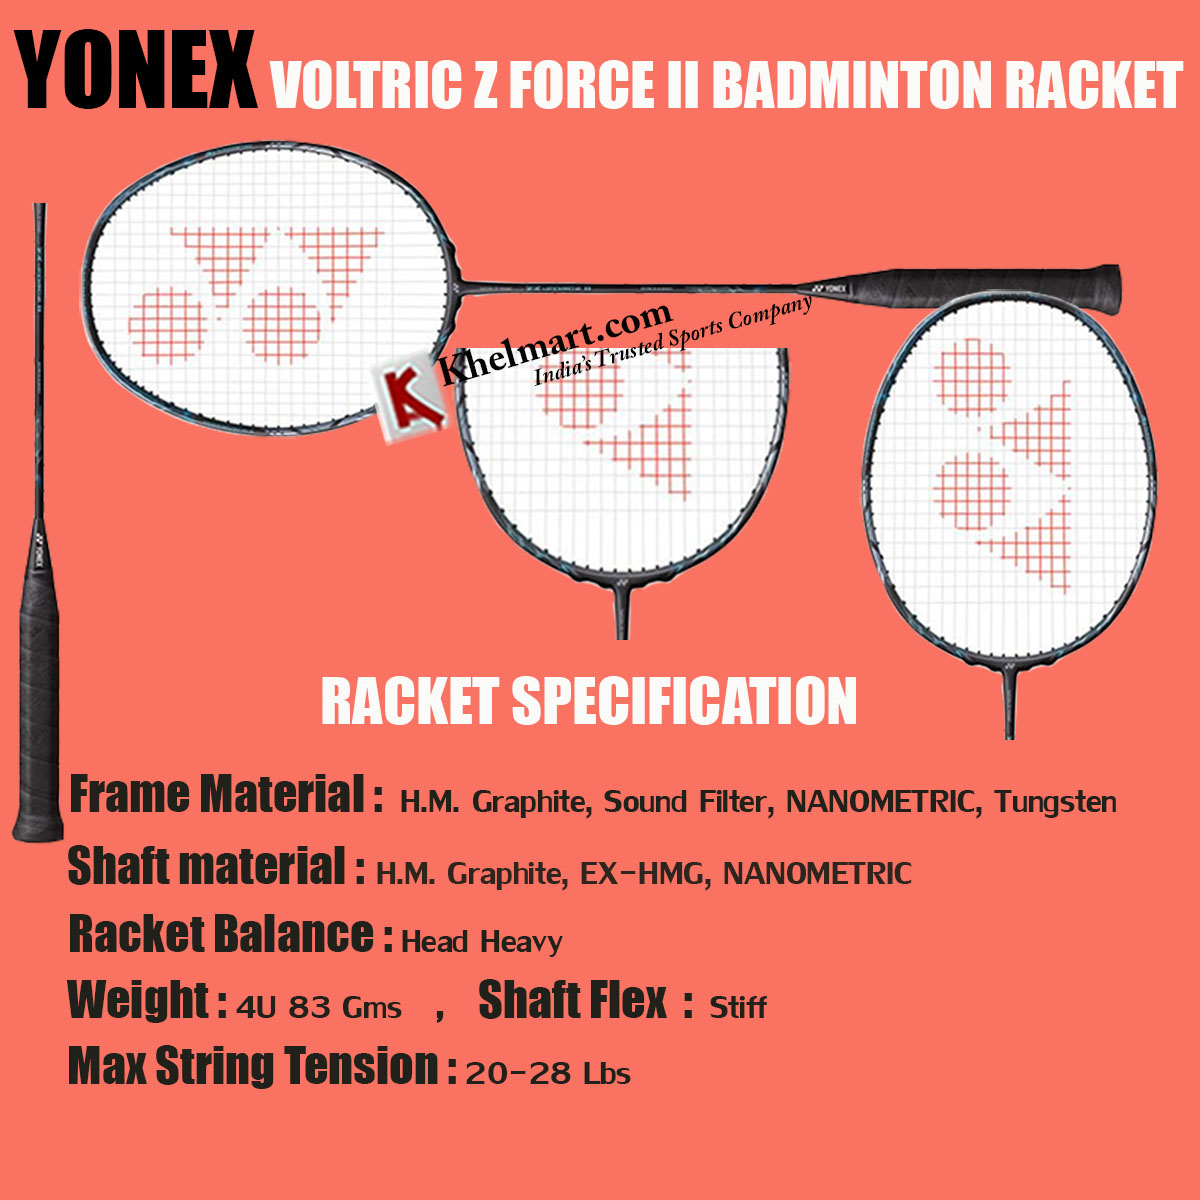 YONEX_VOLTRIC_Z_FORCE_II_BADMINTON_RACKET.jpg